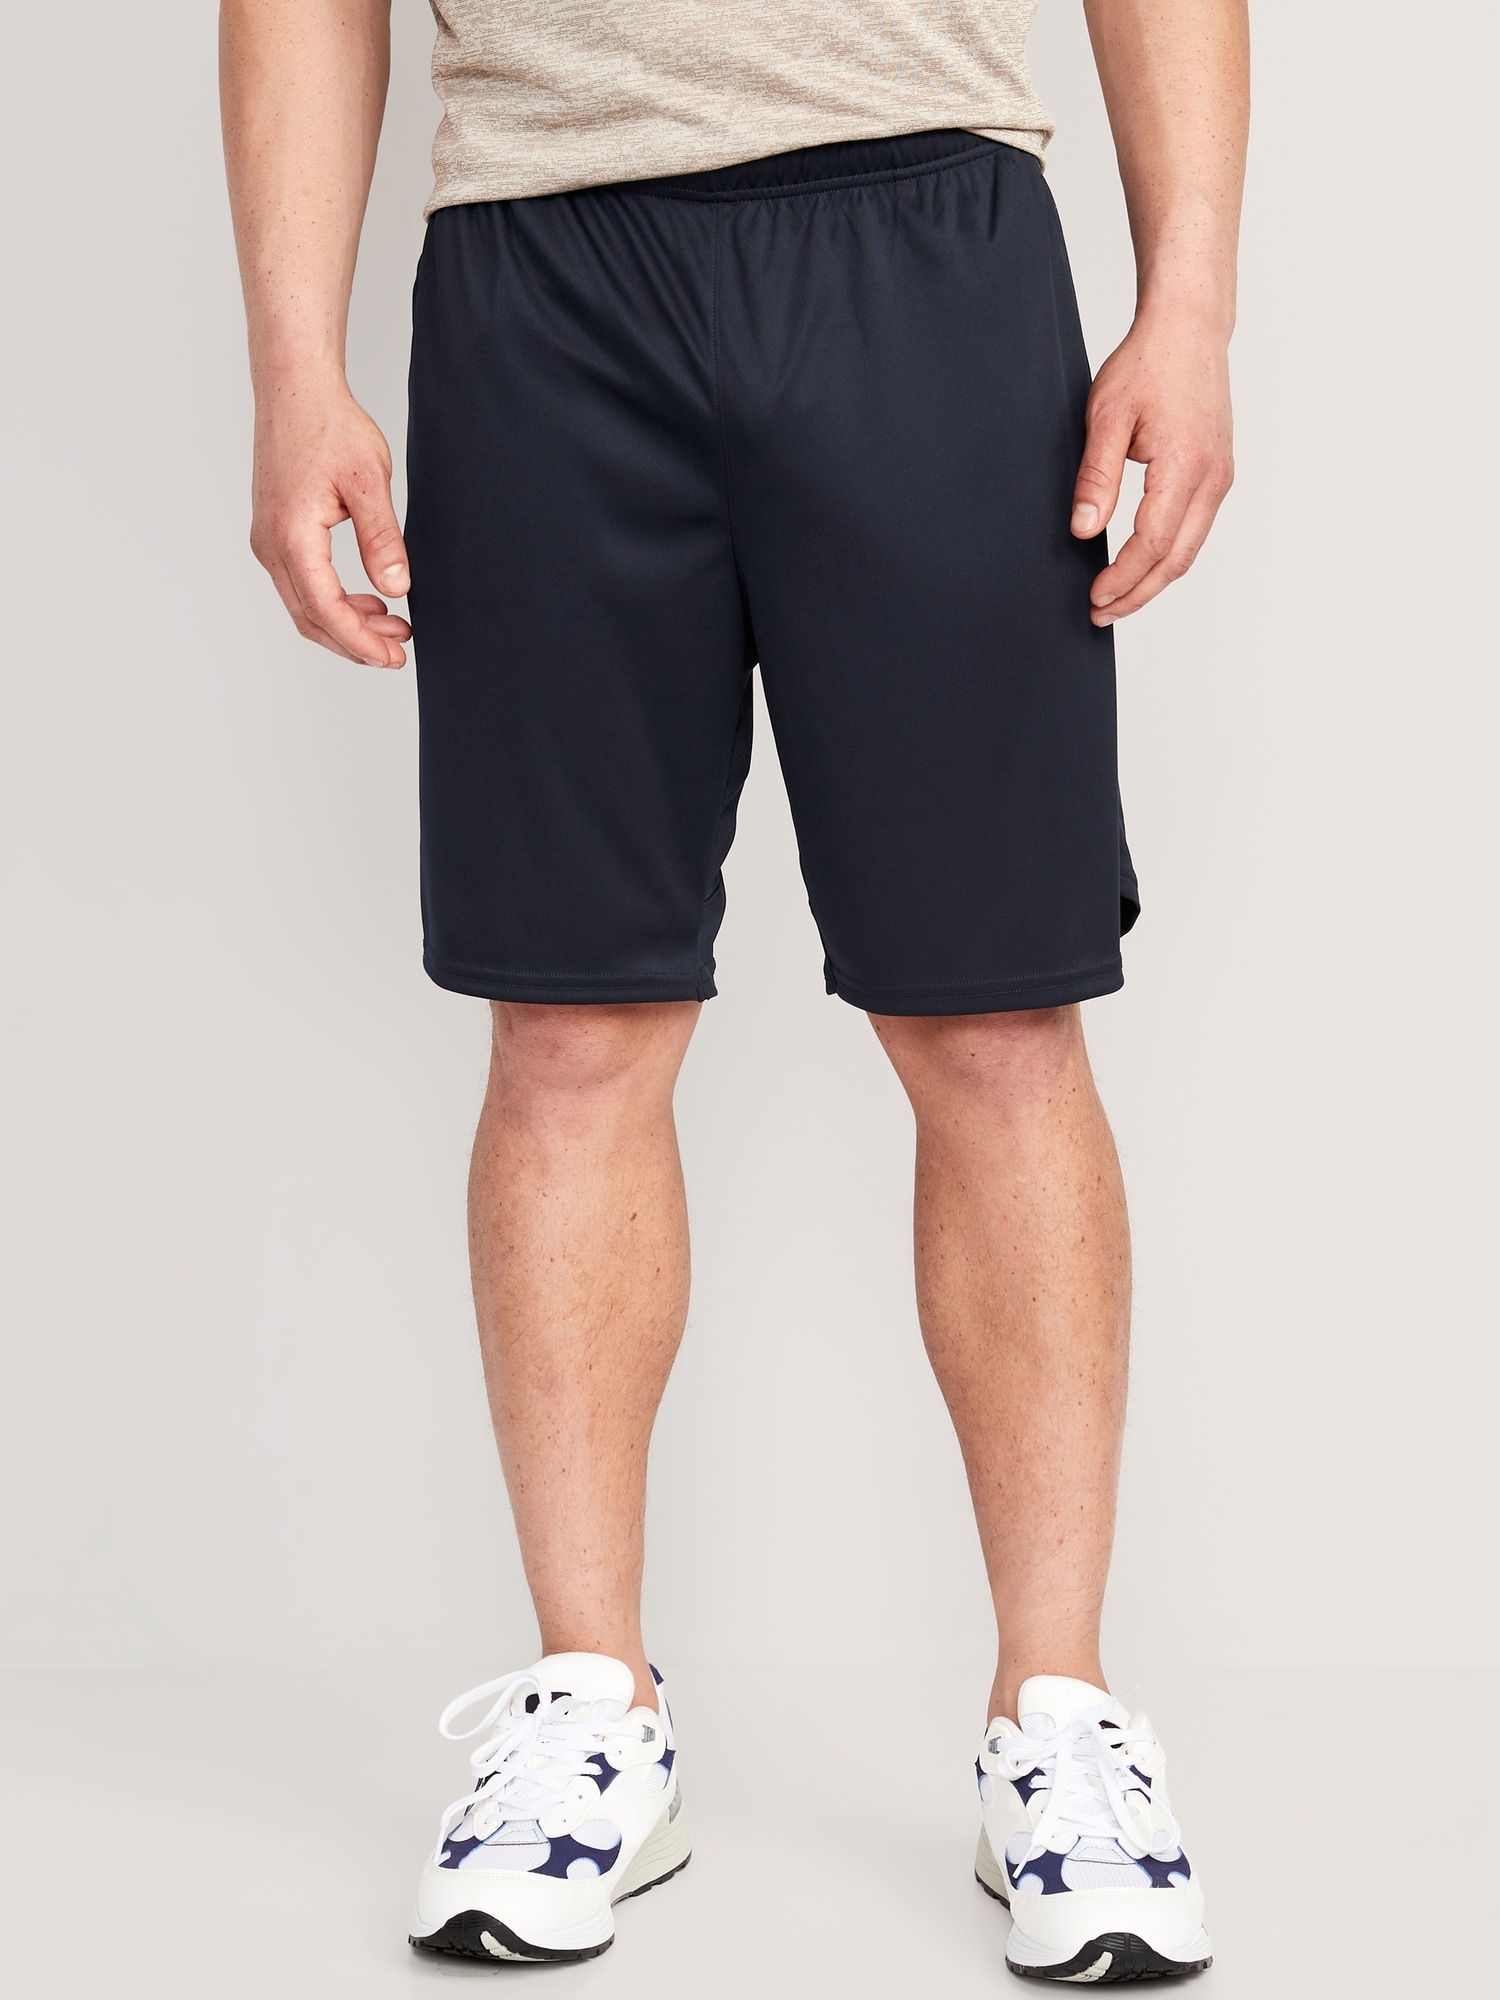 Old Navy Go-Dry Mesh Basketball Shorts for Men -- 9-inch inseam blue. 1